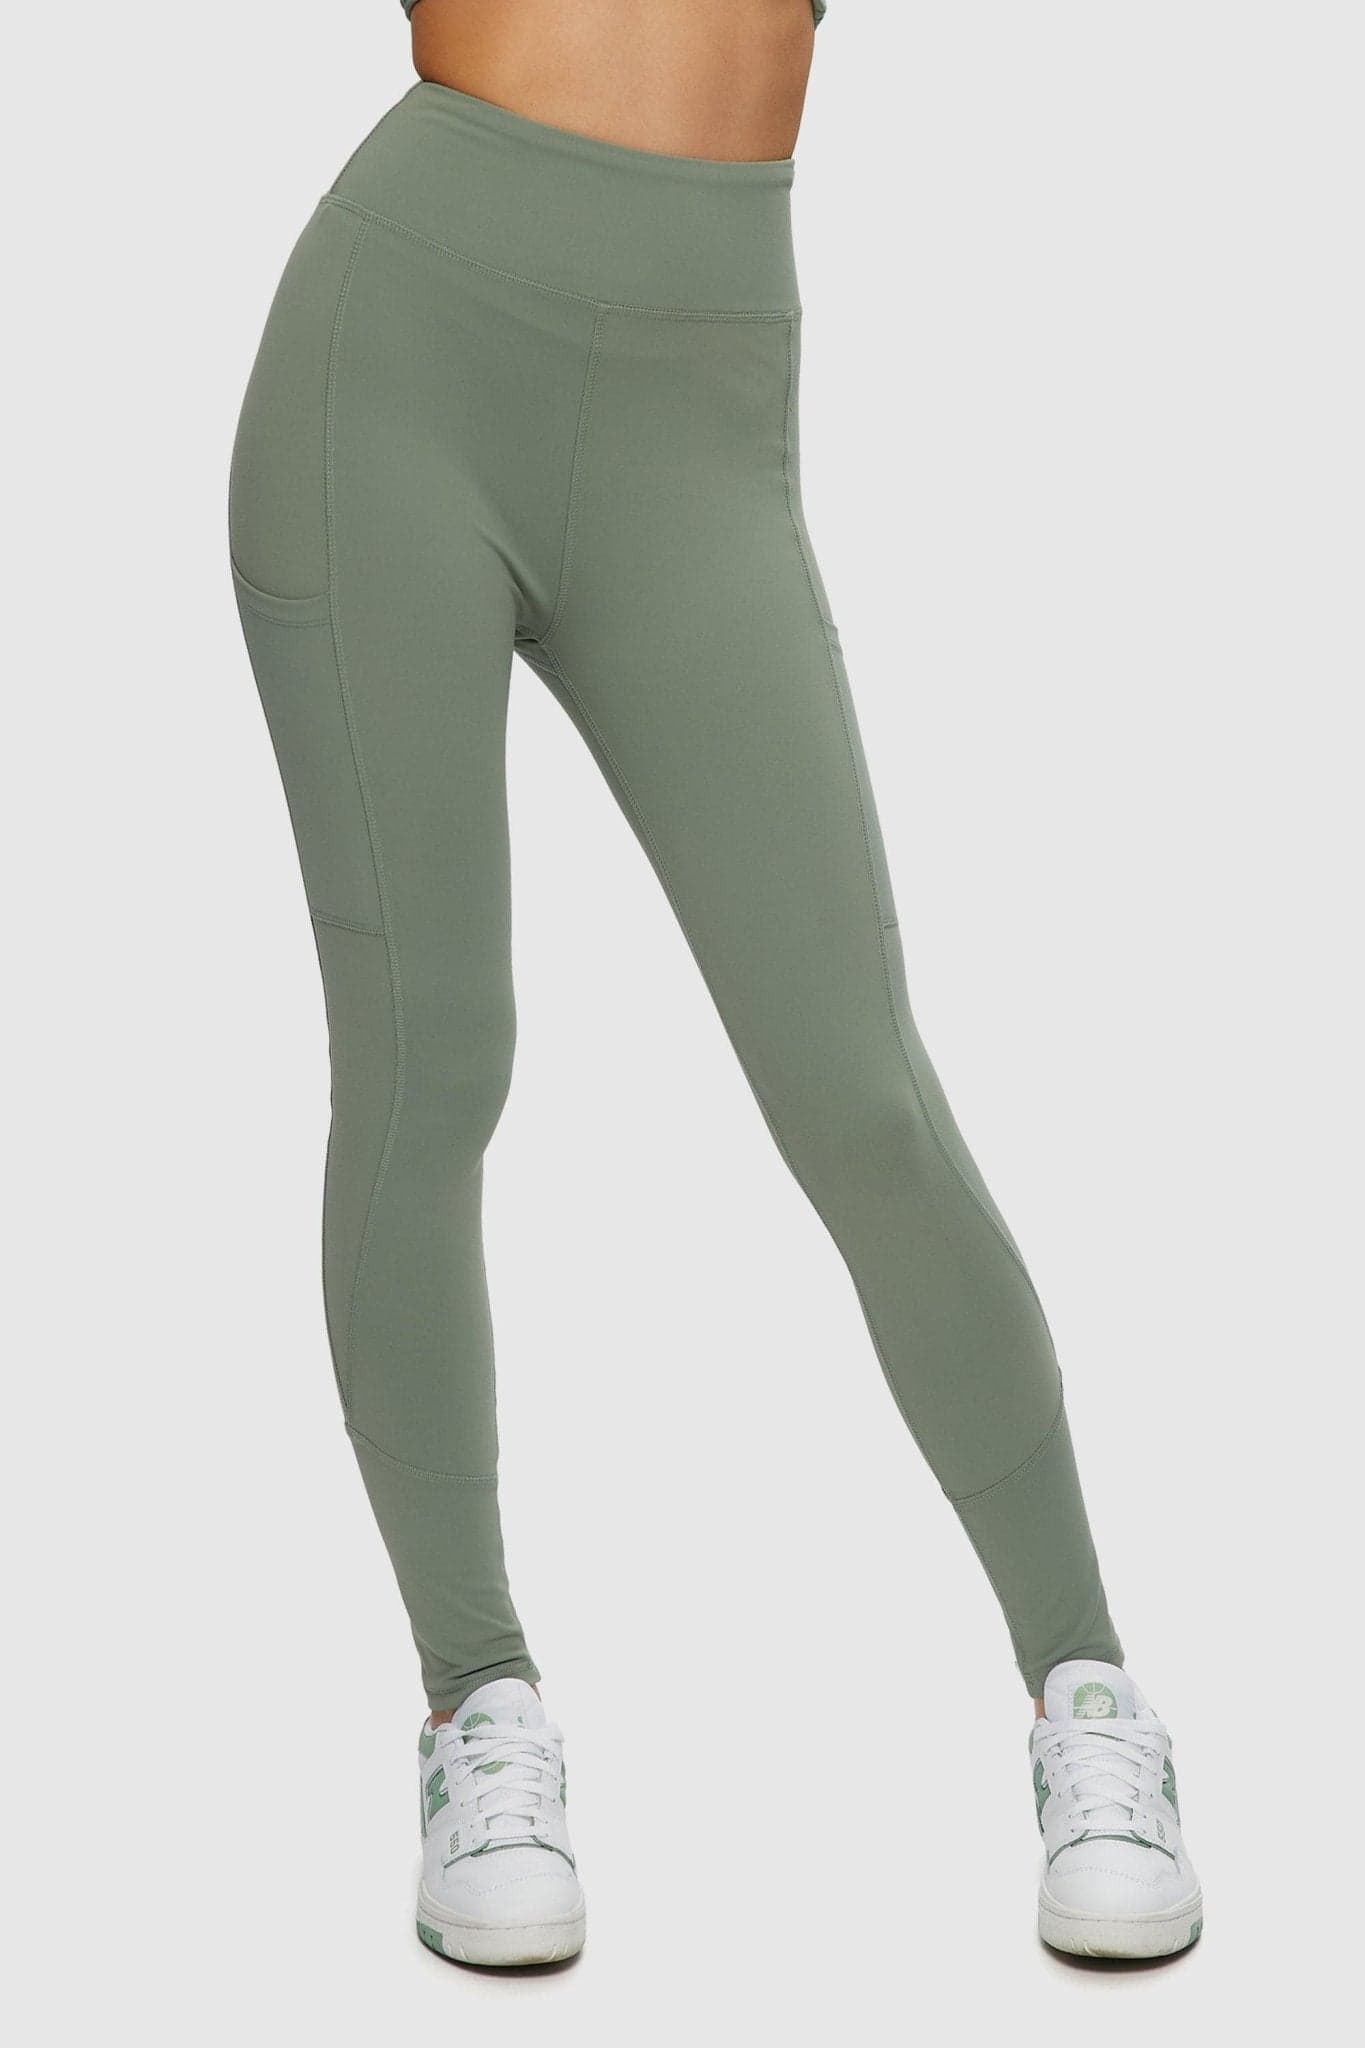 Charella Fashion Women Plaid Printed Yoga Pants Sport High Waisted